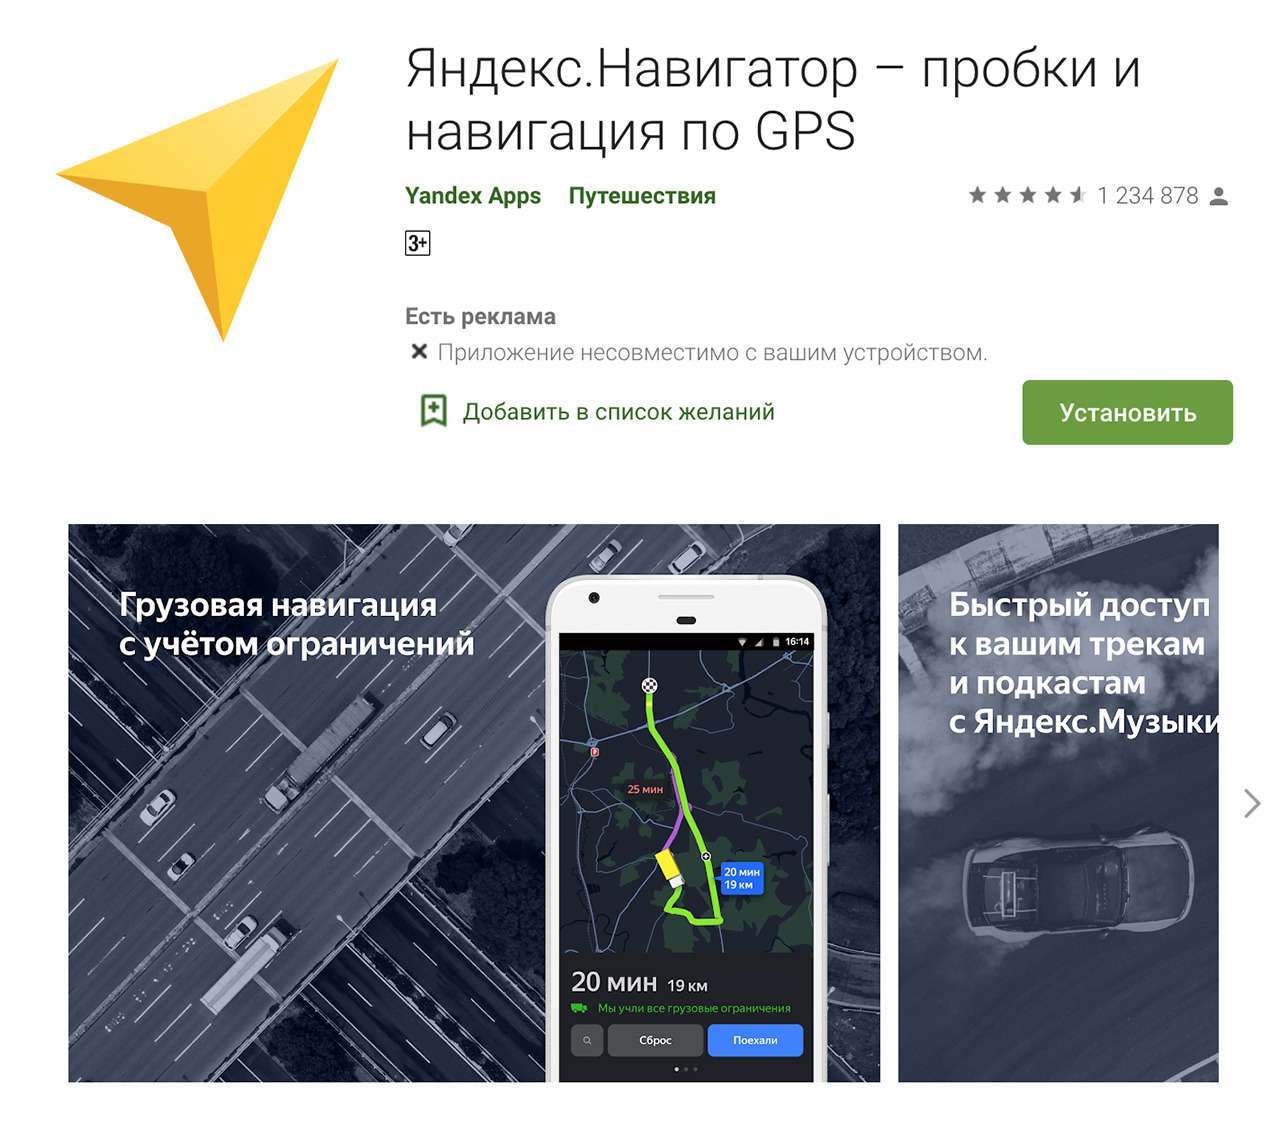 6 альтернатив Яндекс.Навигатору. Выберите свою — фото 1195240